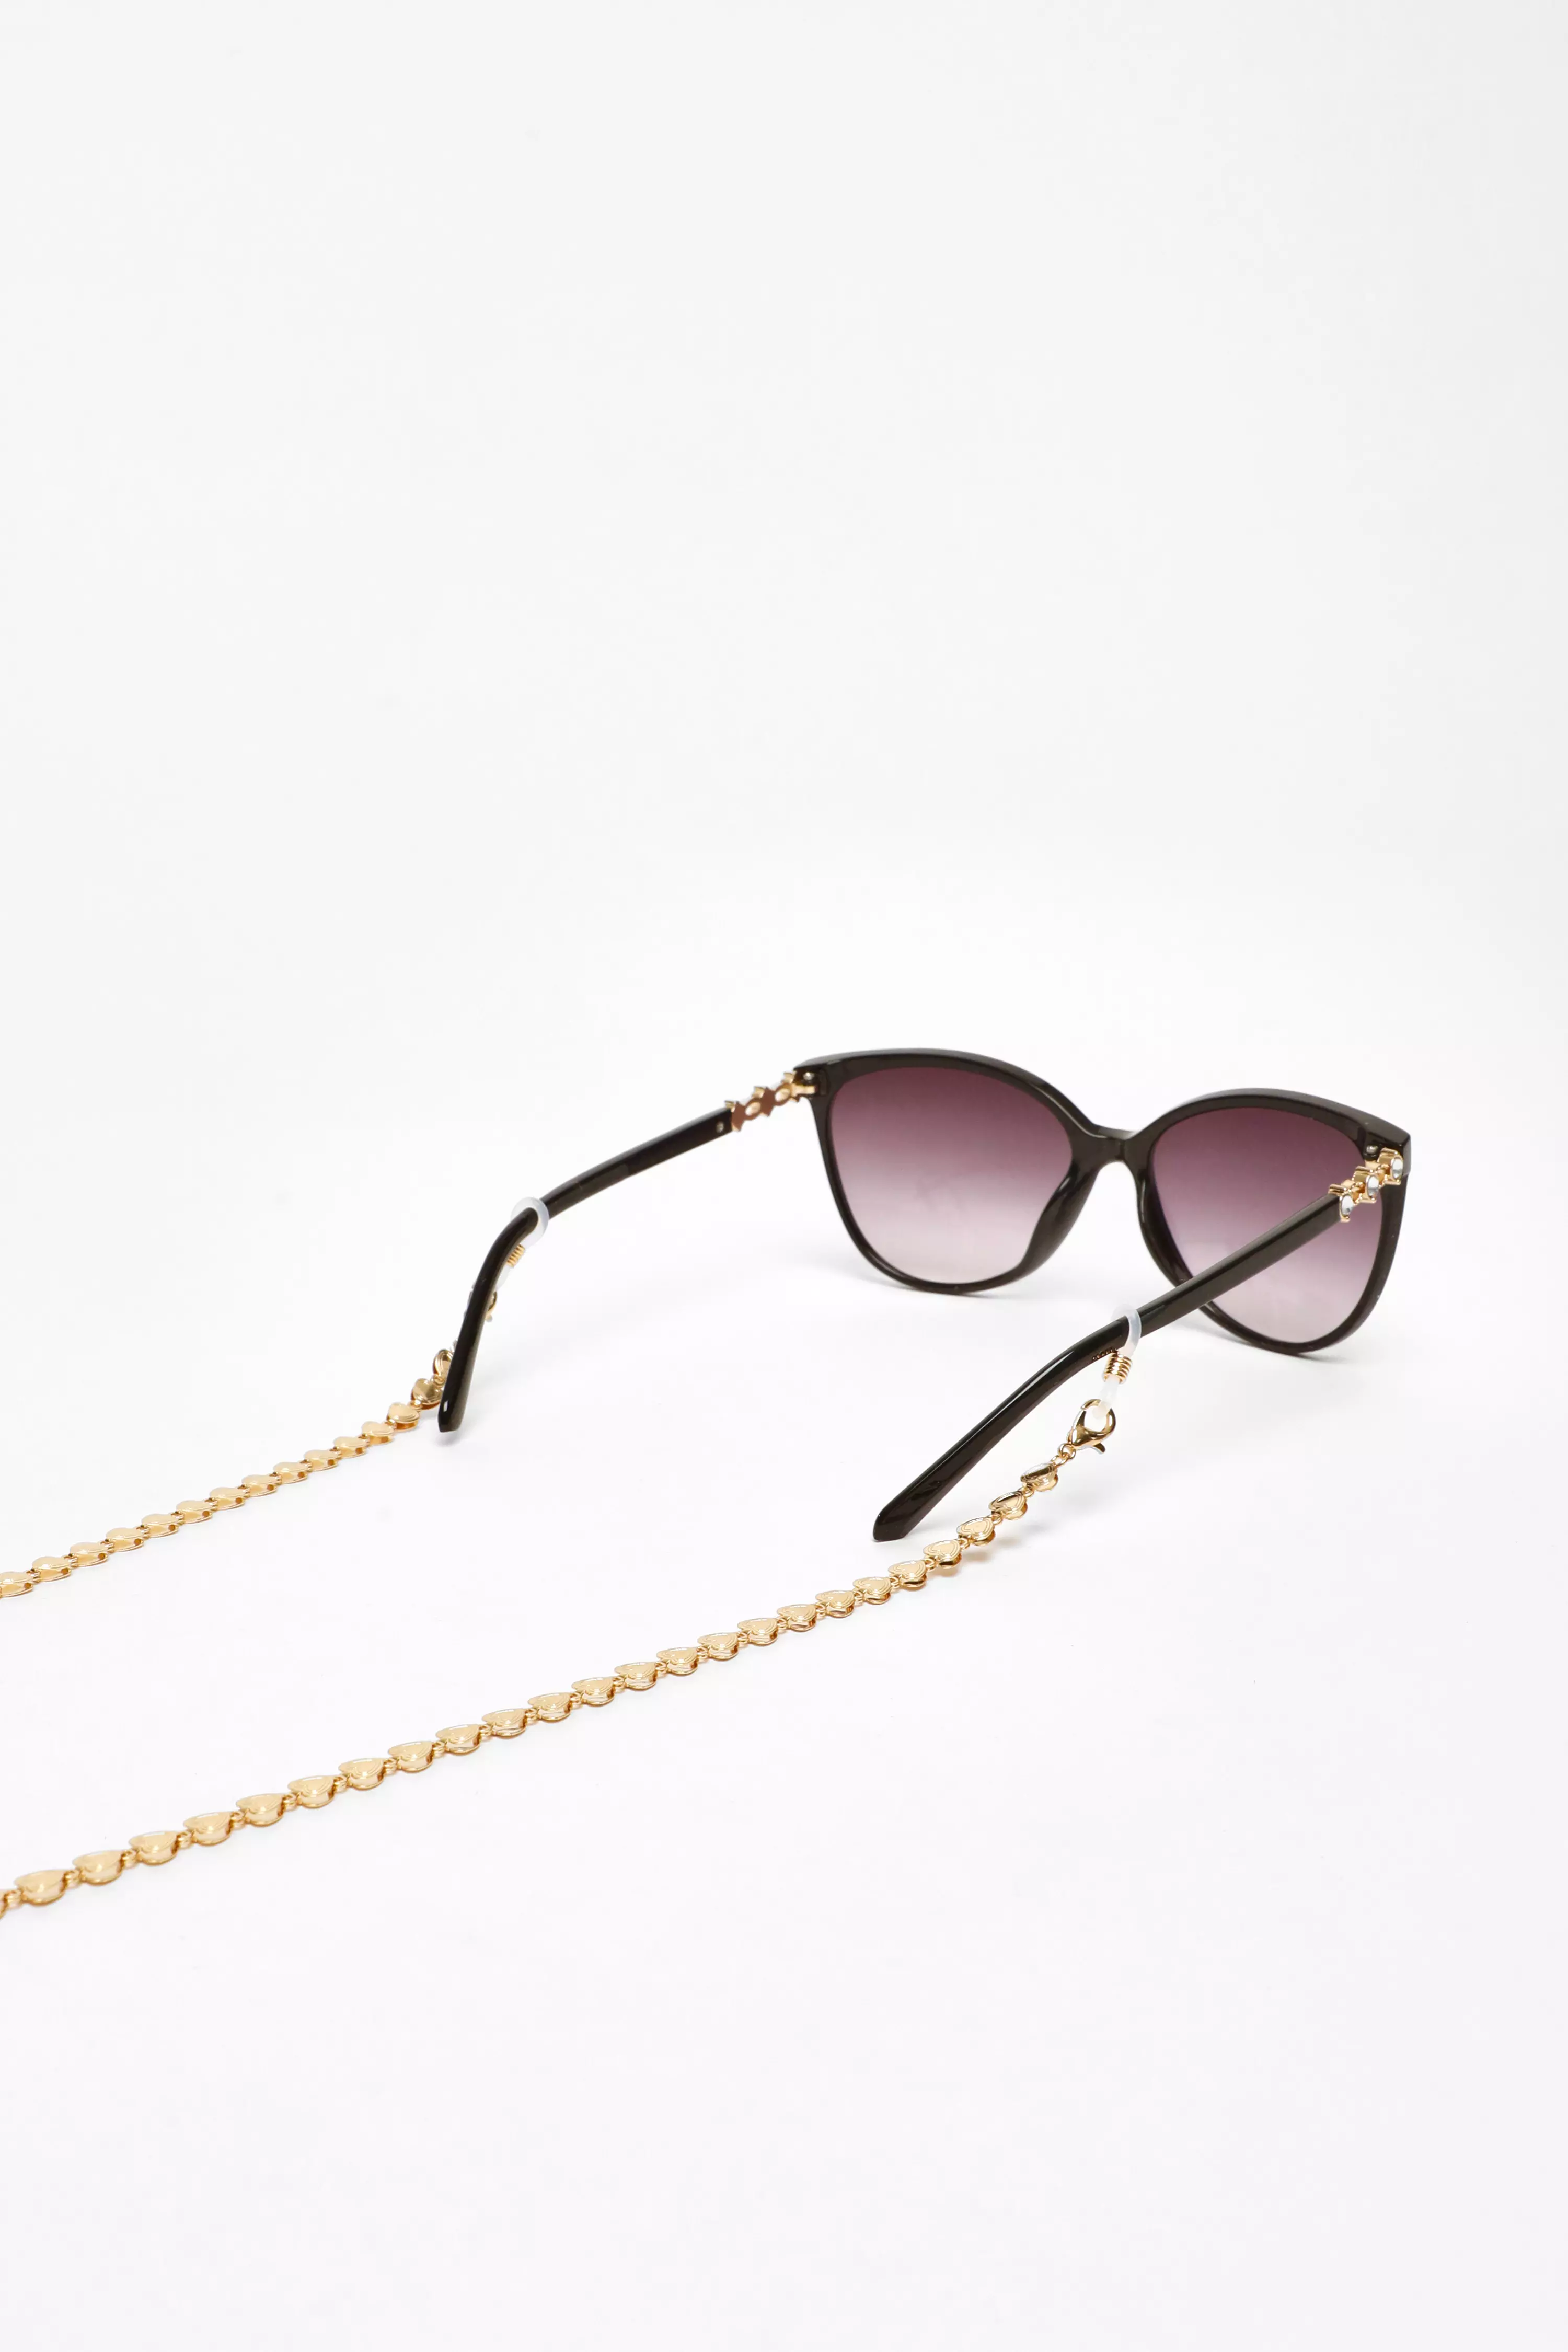 Gold Heart Sunglasses Chain